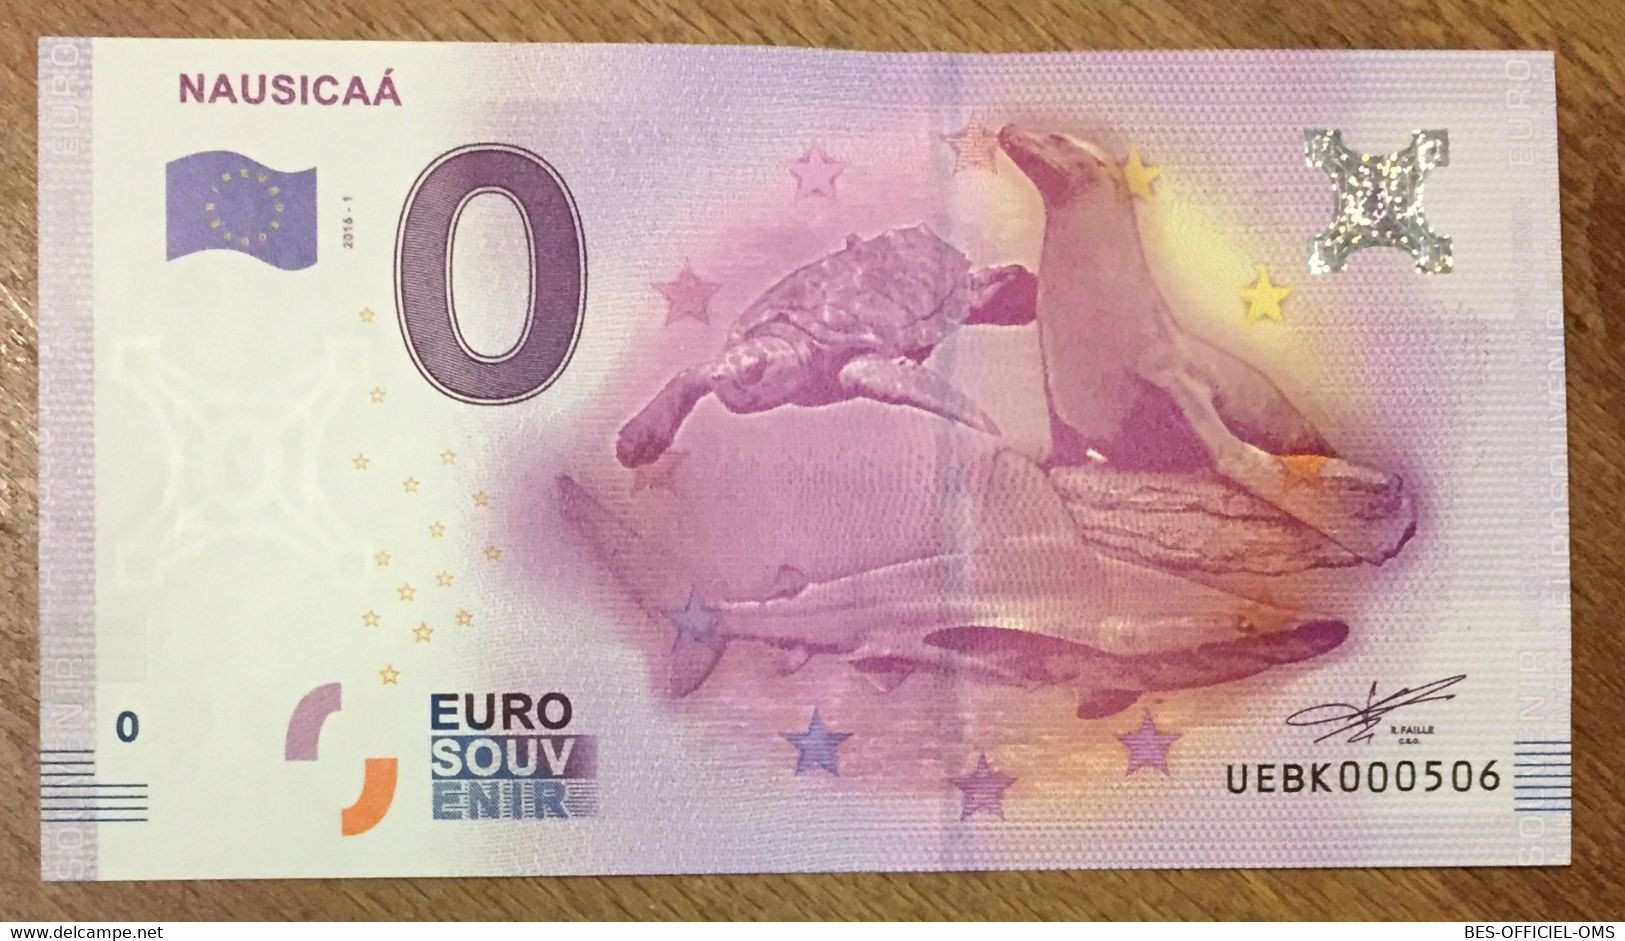 2016 BILLET 0 EURO SOUVENIR DPT 62 NAUSICAÀ ZERO 0 EURO SCHEIN BANKNOTE PAPER MONEY BANK PAPER MONEY - Private Proofs / Unofficial